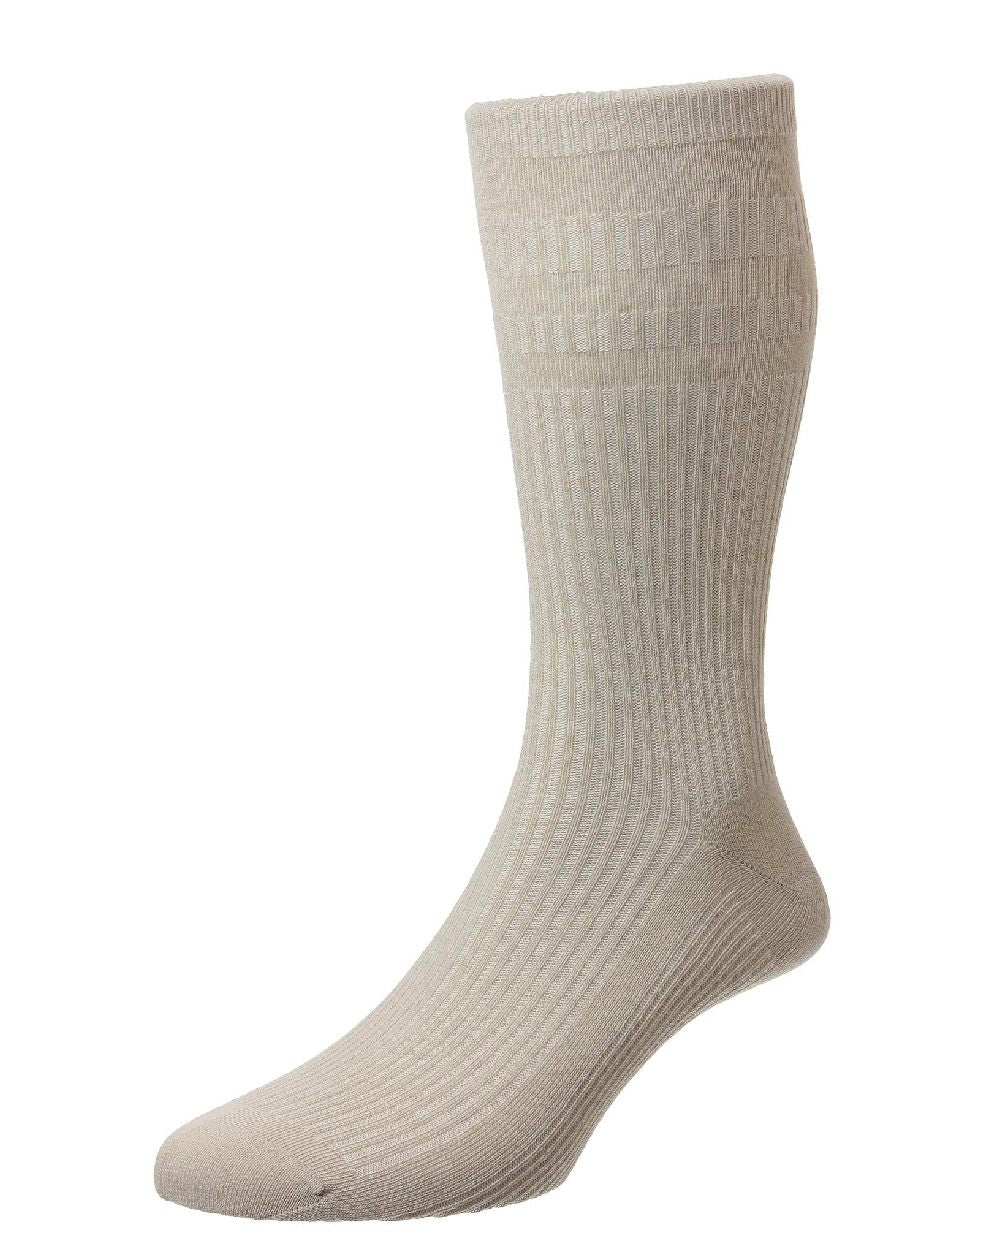 HJ Hall Original Cotton Soft Top Socks in Oatmeall 